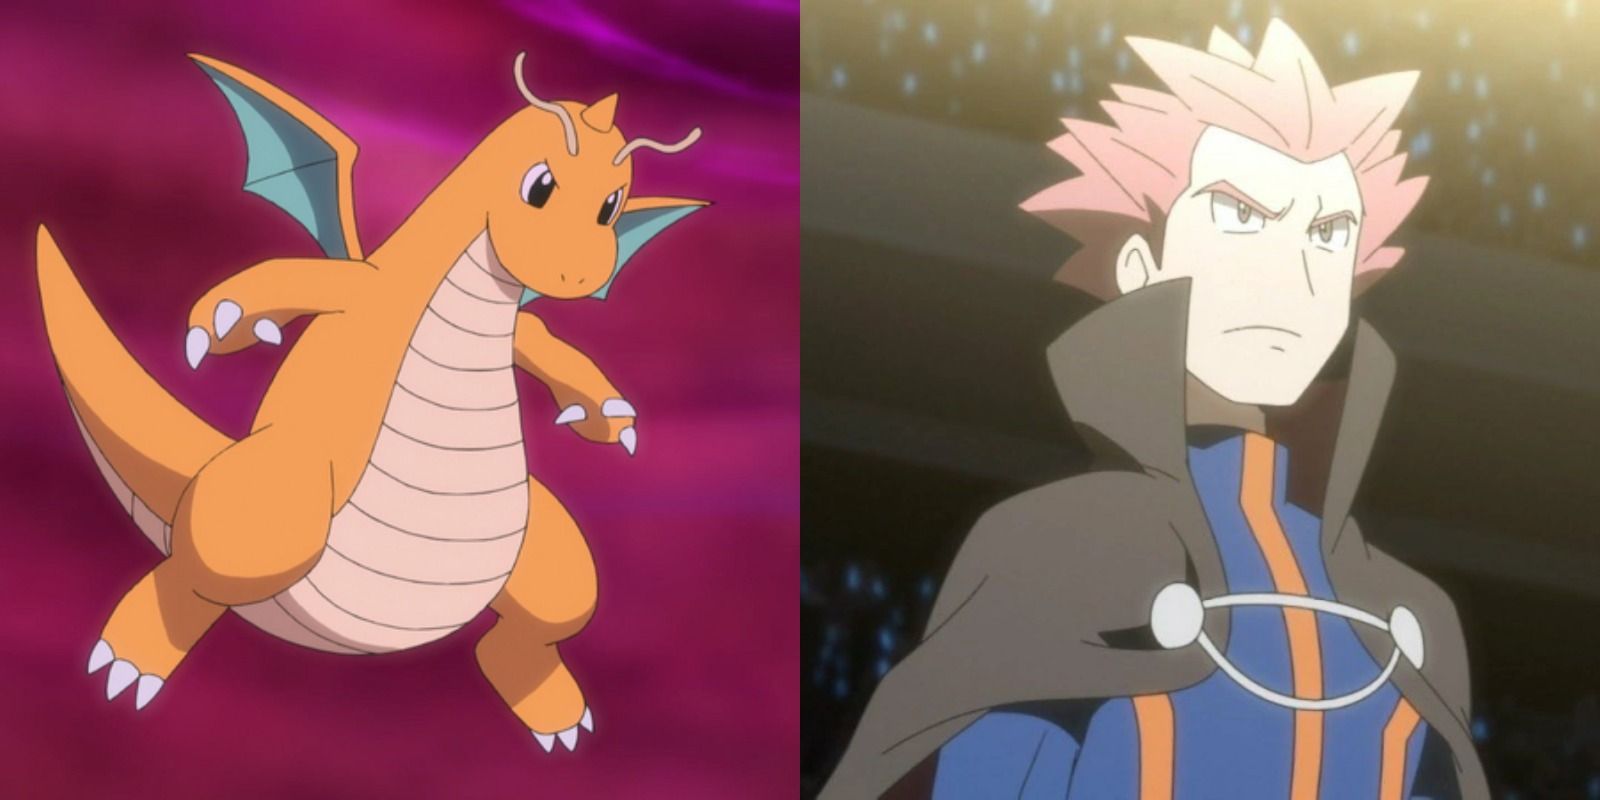 Gesplitste afbeelding van Dragonite en Lance in de Pokemon-anime